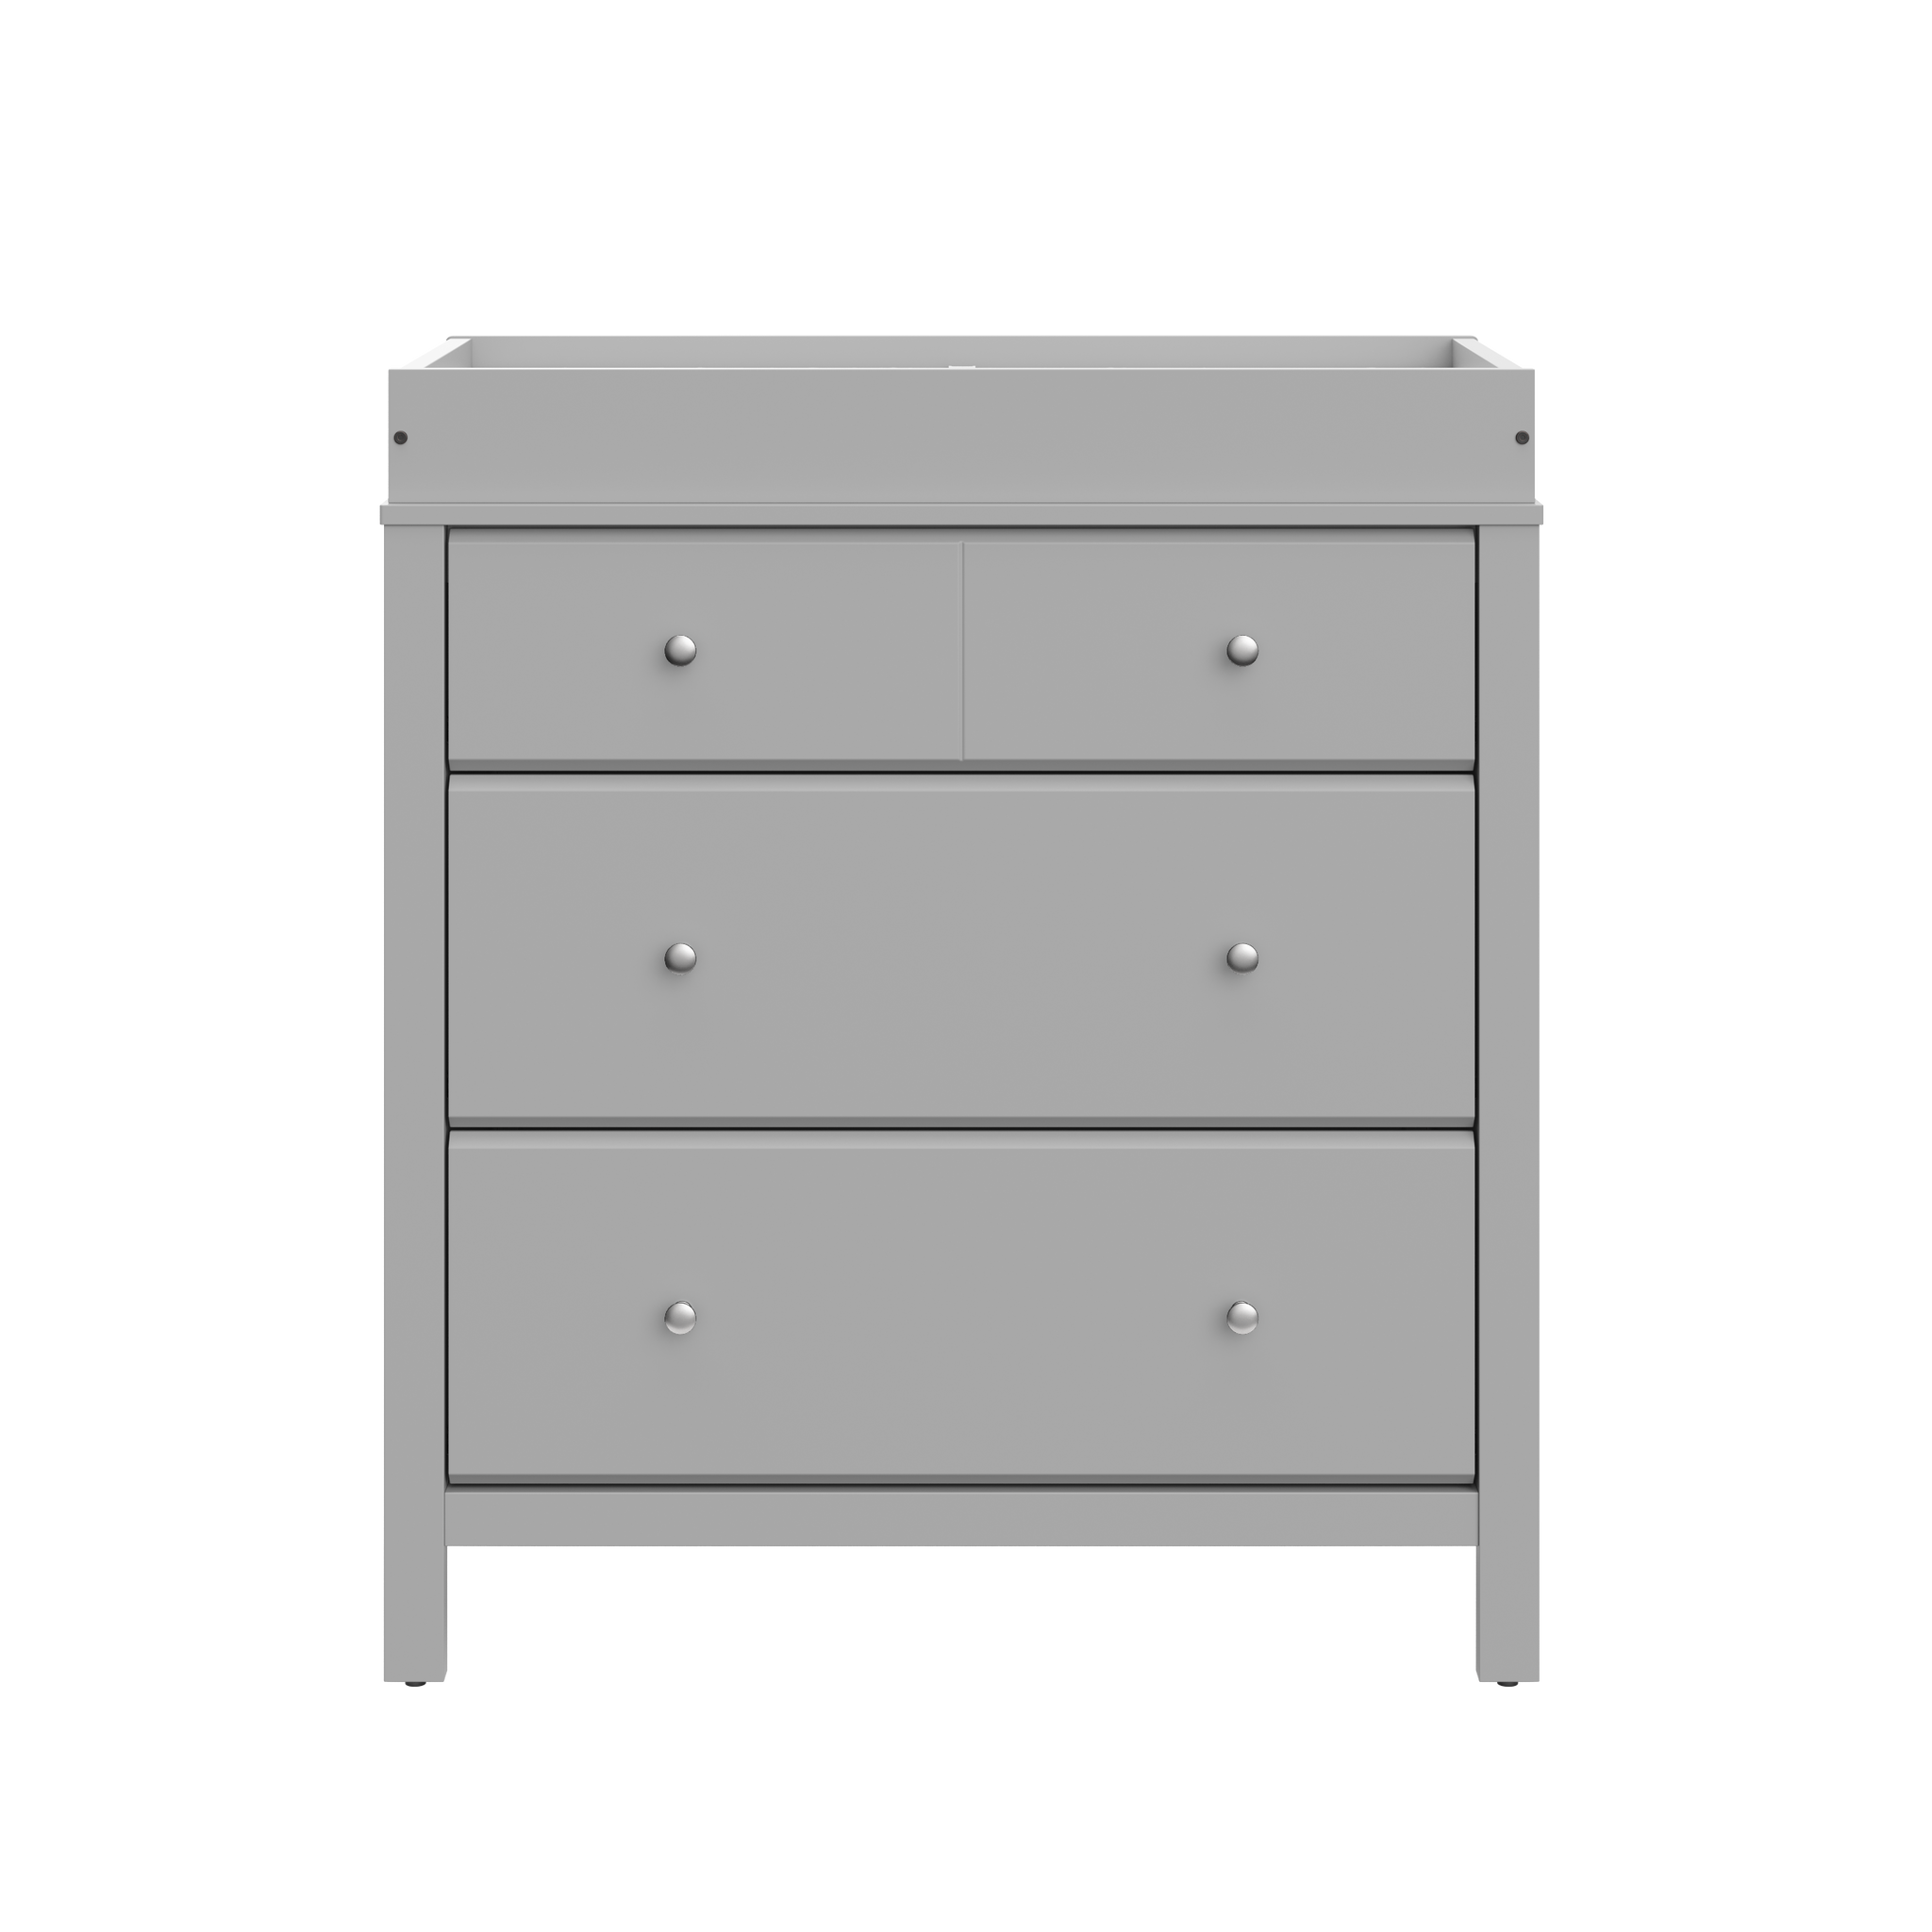 pebble gray 3 drawer chest